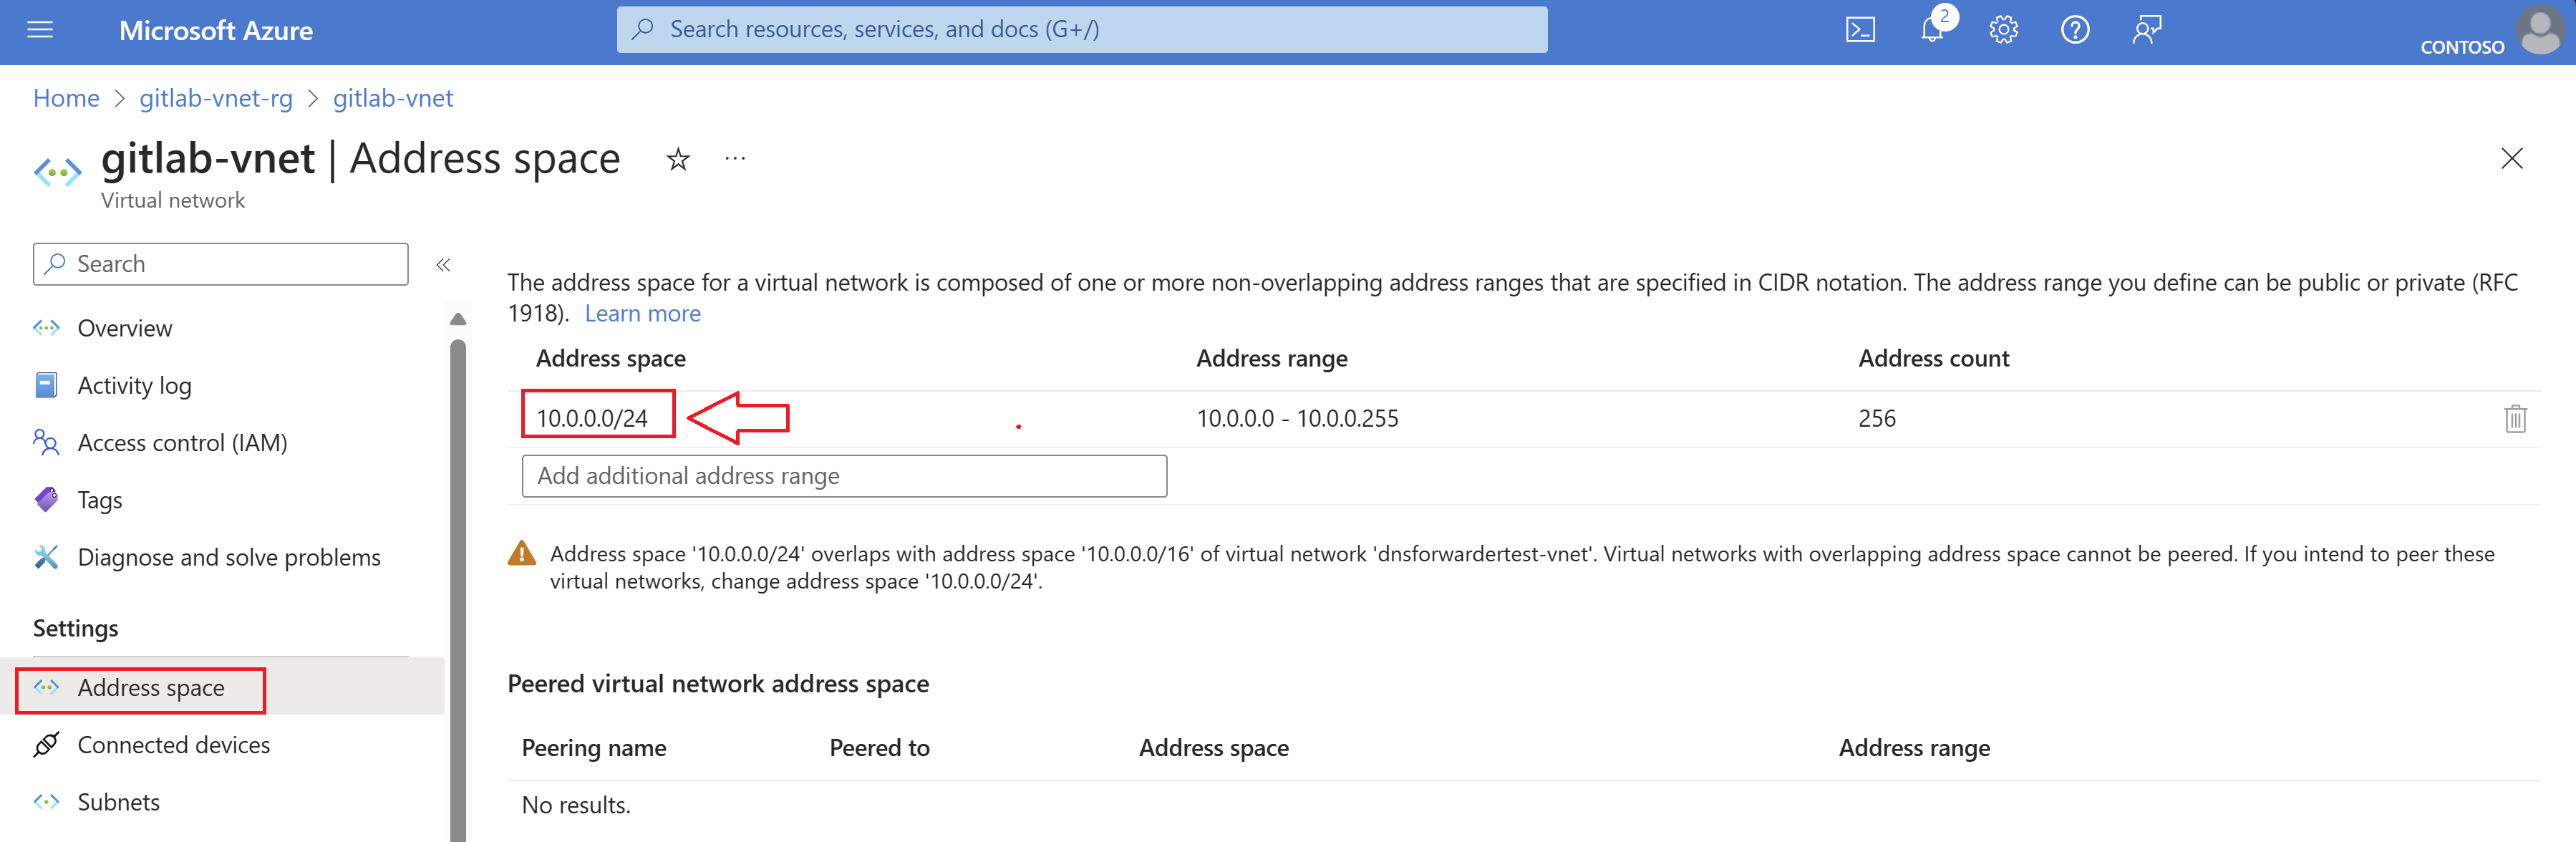 Screenshot of Azure Virtual Network Address space in the Azure Portal